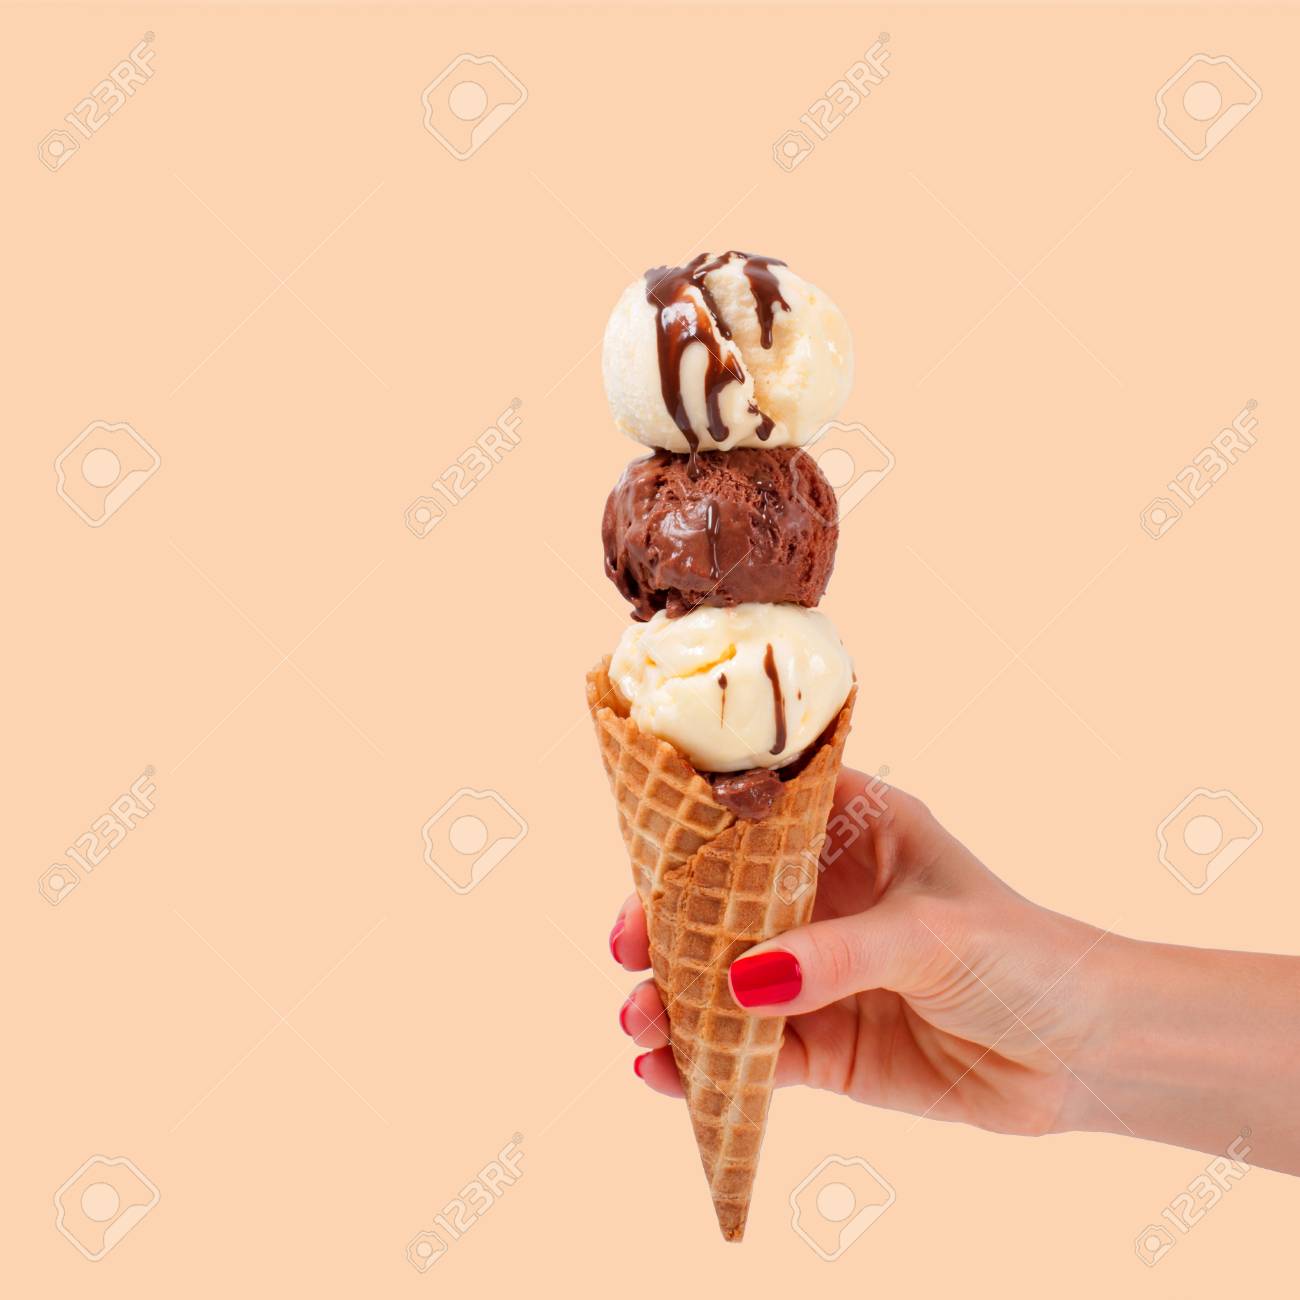 Chocolate And Vanilla Ice Cream Cone On Faded Pastel Color